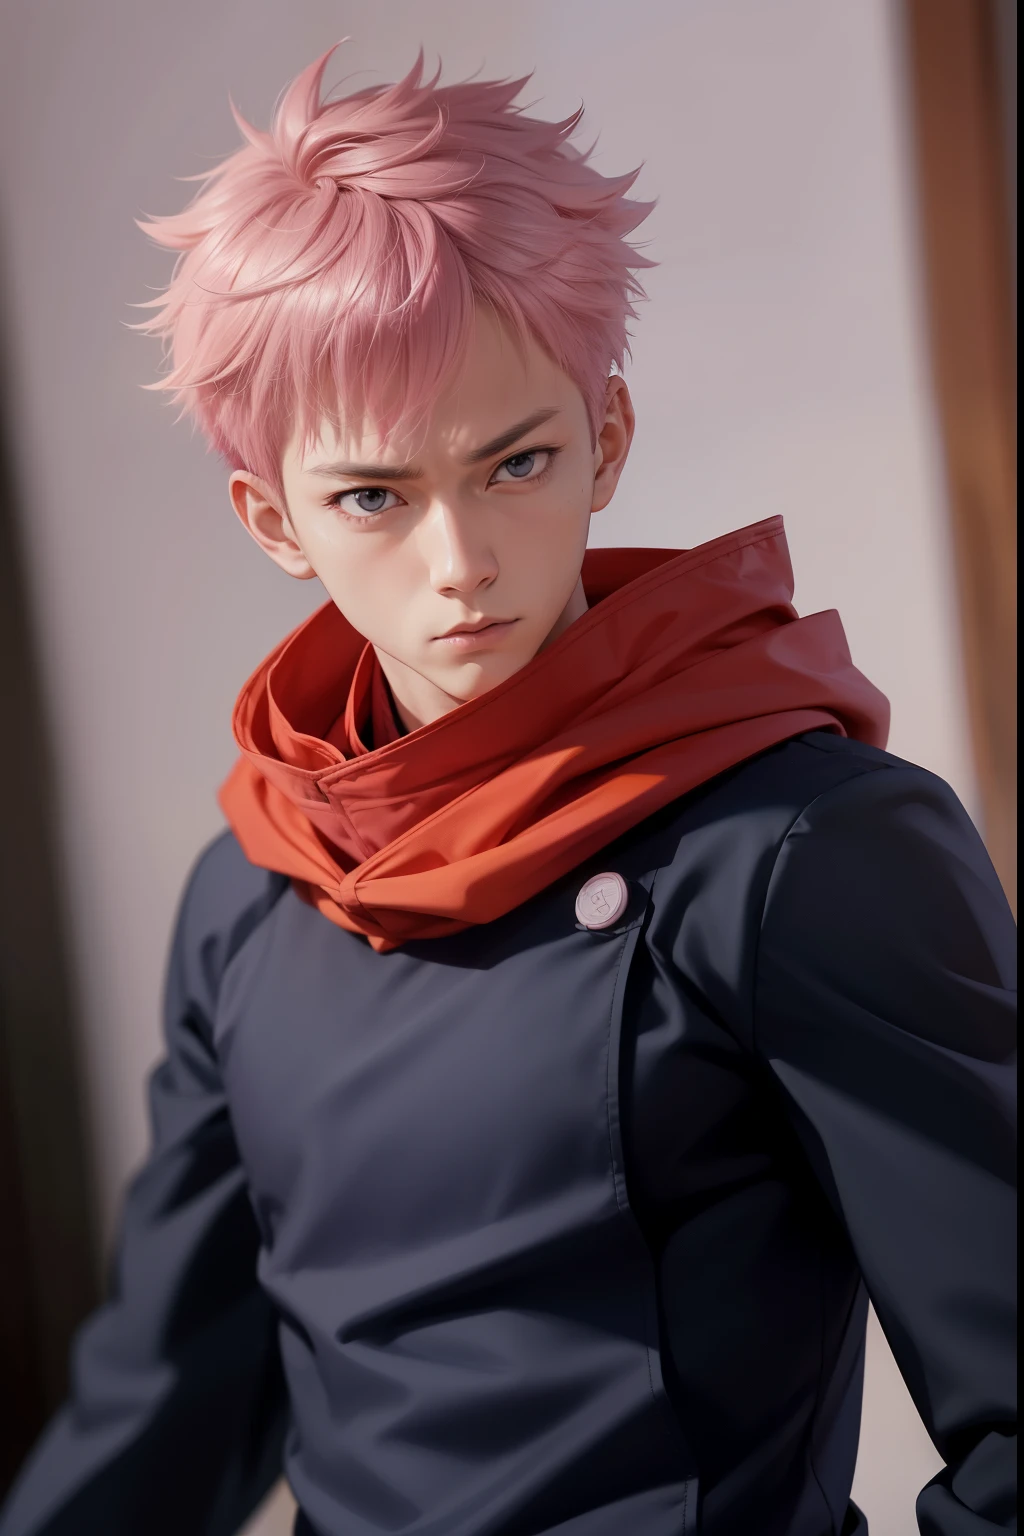 Yuji Itadori Personnage de l&#39;Anime Jujutsu Kaisen, style animé réaliste, beau garçon, Uniforme de Jujutsu, cheveux courts roses, Contexte du lycée Jujutsu